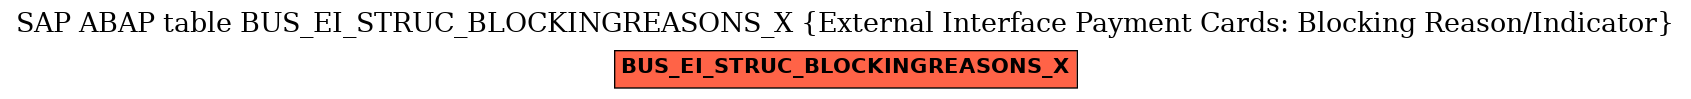 E-R Diagram for table BUS_EI_STRUC_BLOCKINGREASONS_X (External Interface Payment Cards: Blocking Reason/Indicator)